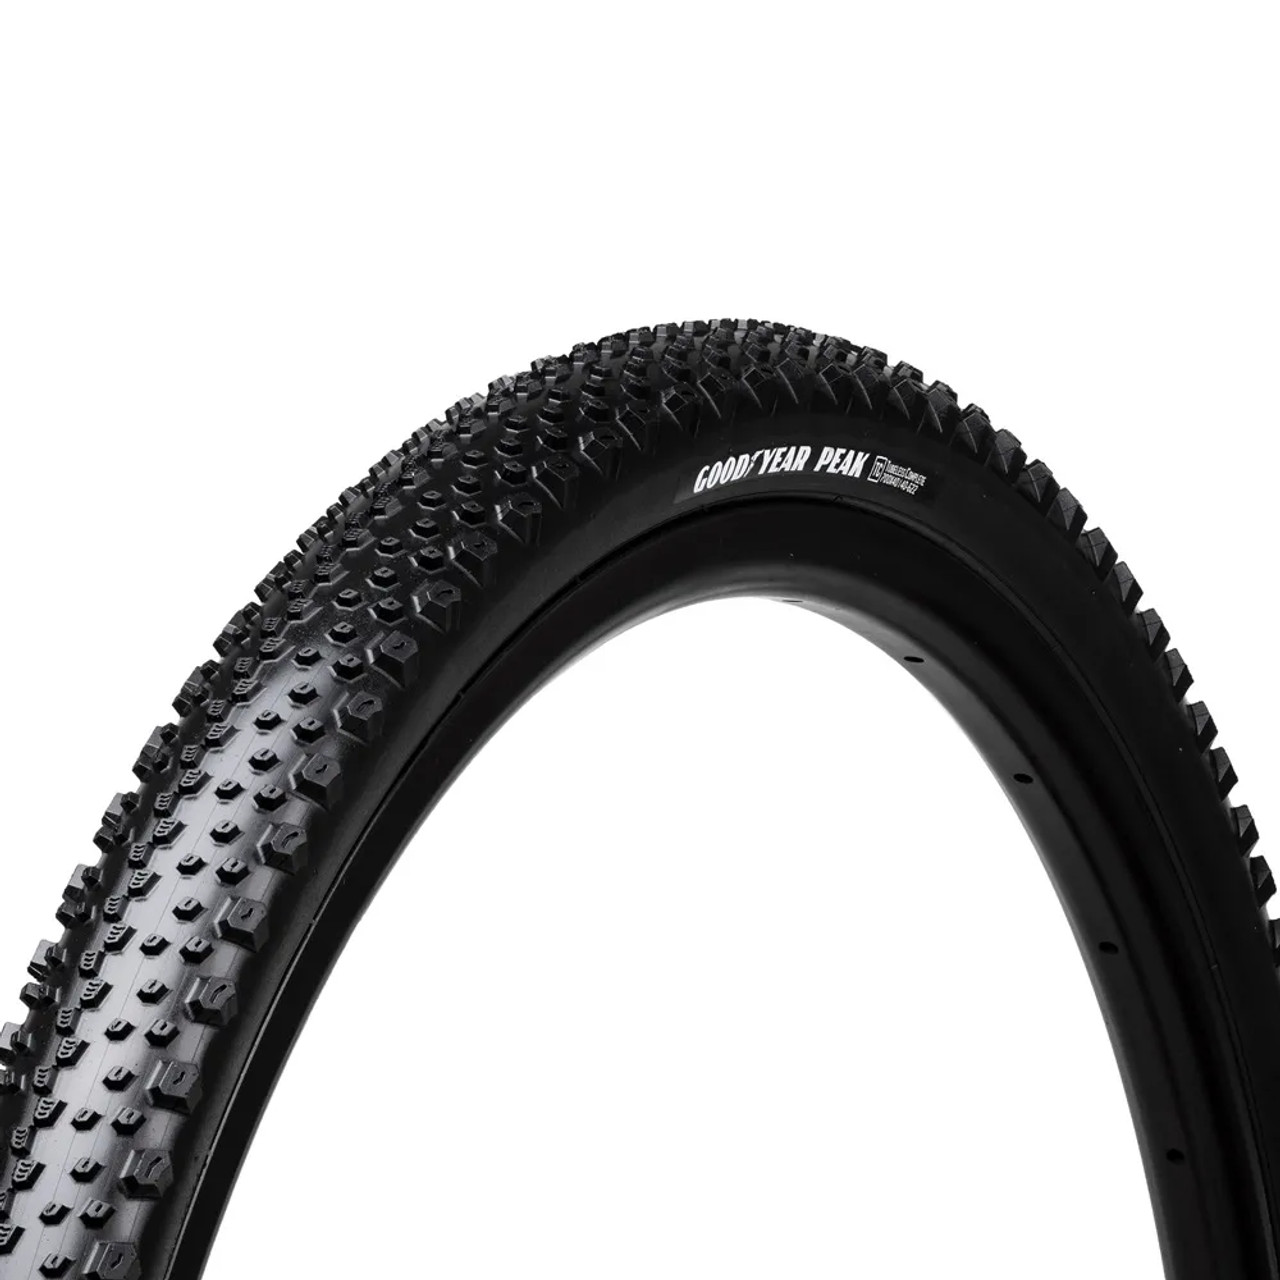 Goodyear Peak Ultimate Tubeless Complete MTB Trail XC Tyre In Black 700 x 40c